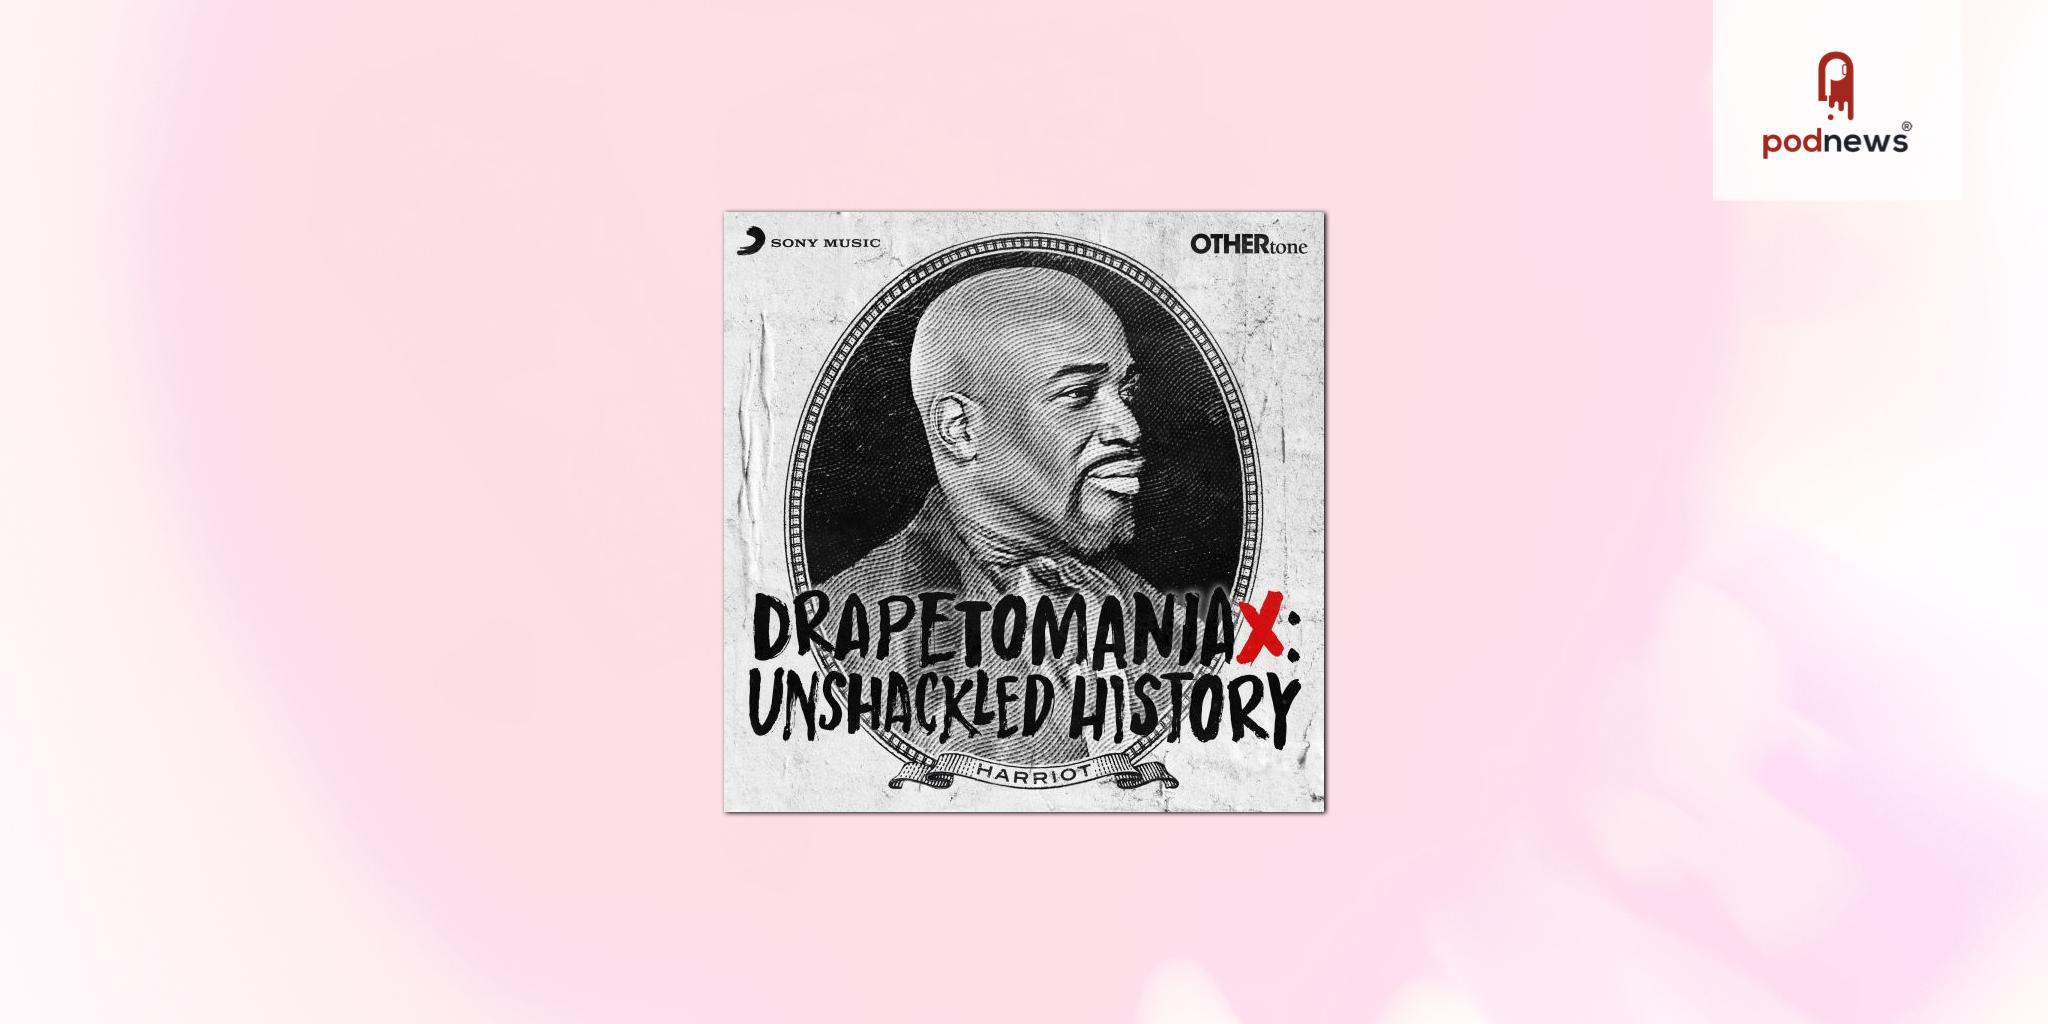 Drapetomaniax: Unshackled History explores untold stories of Black Americans